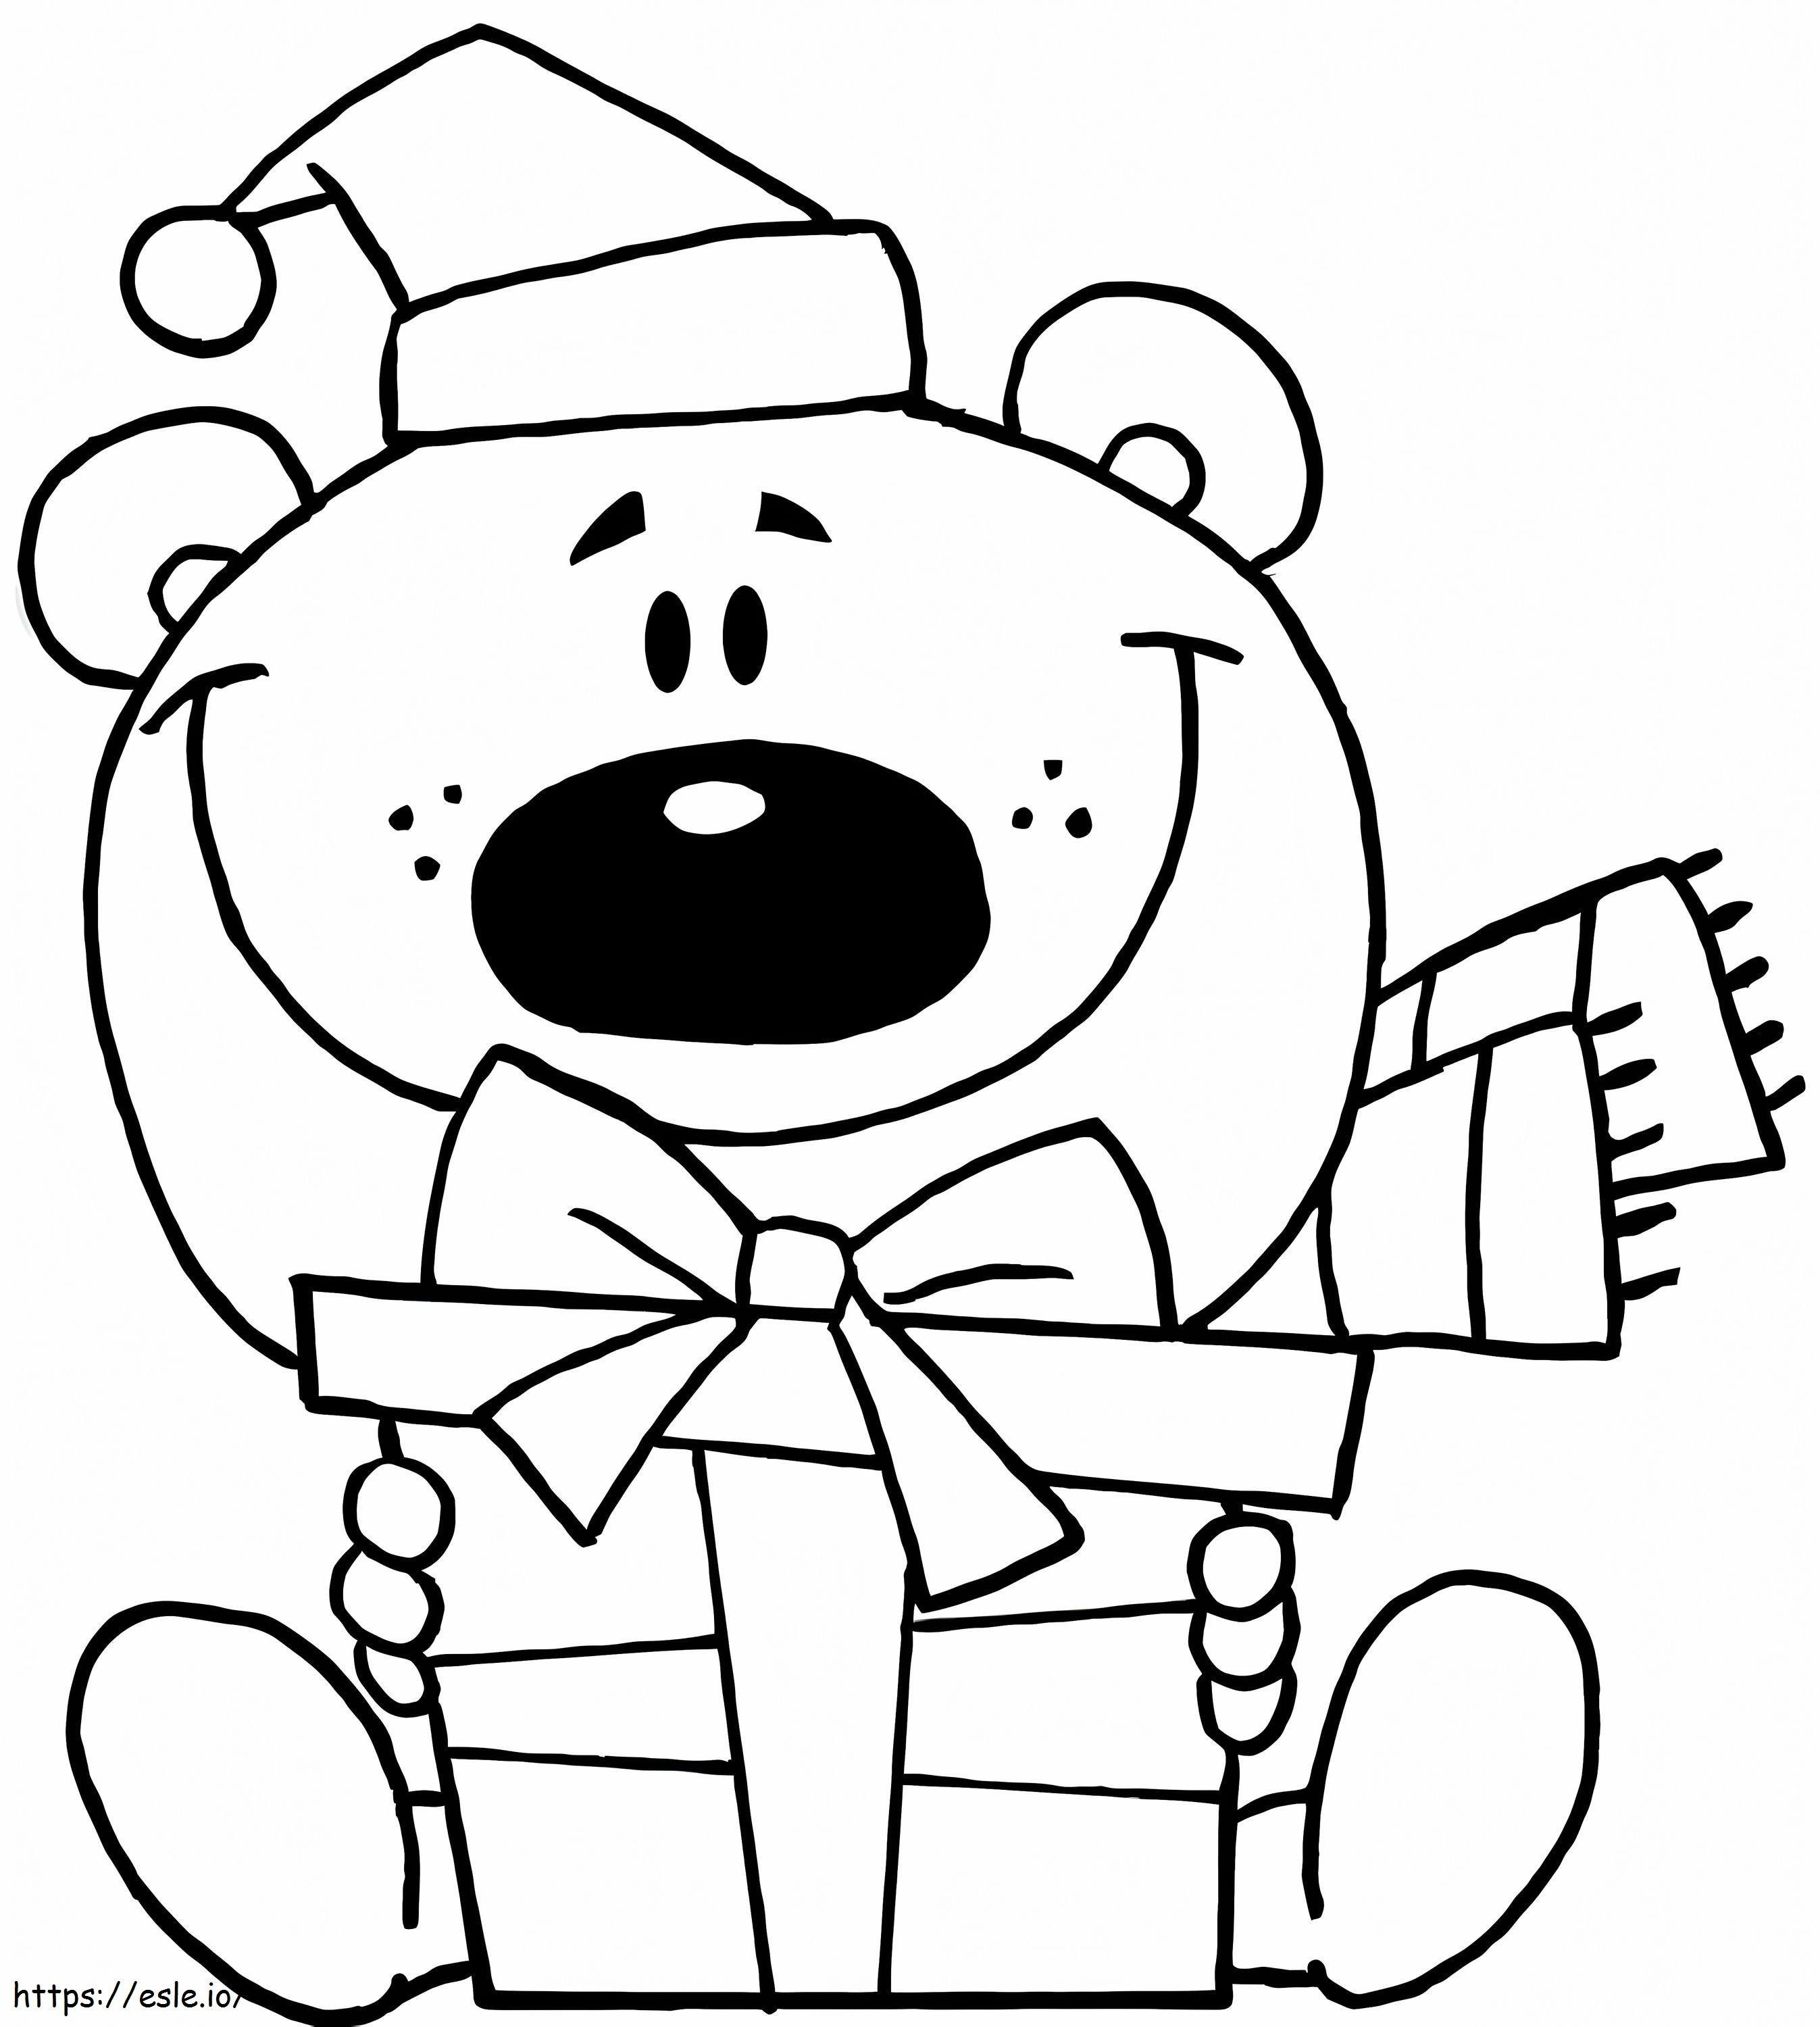 Christmas Bear 1 coloring page